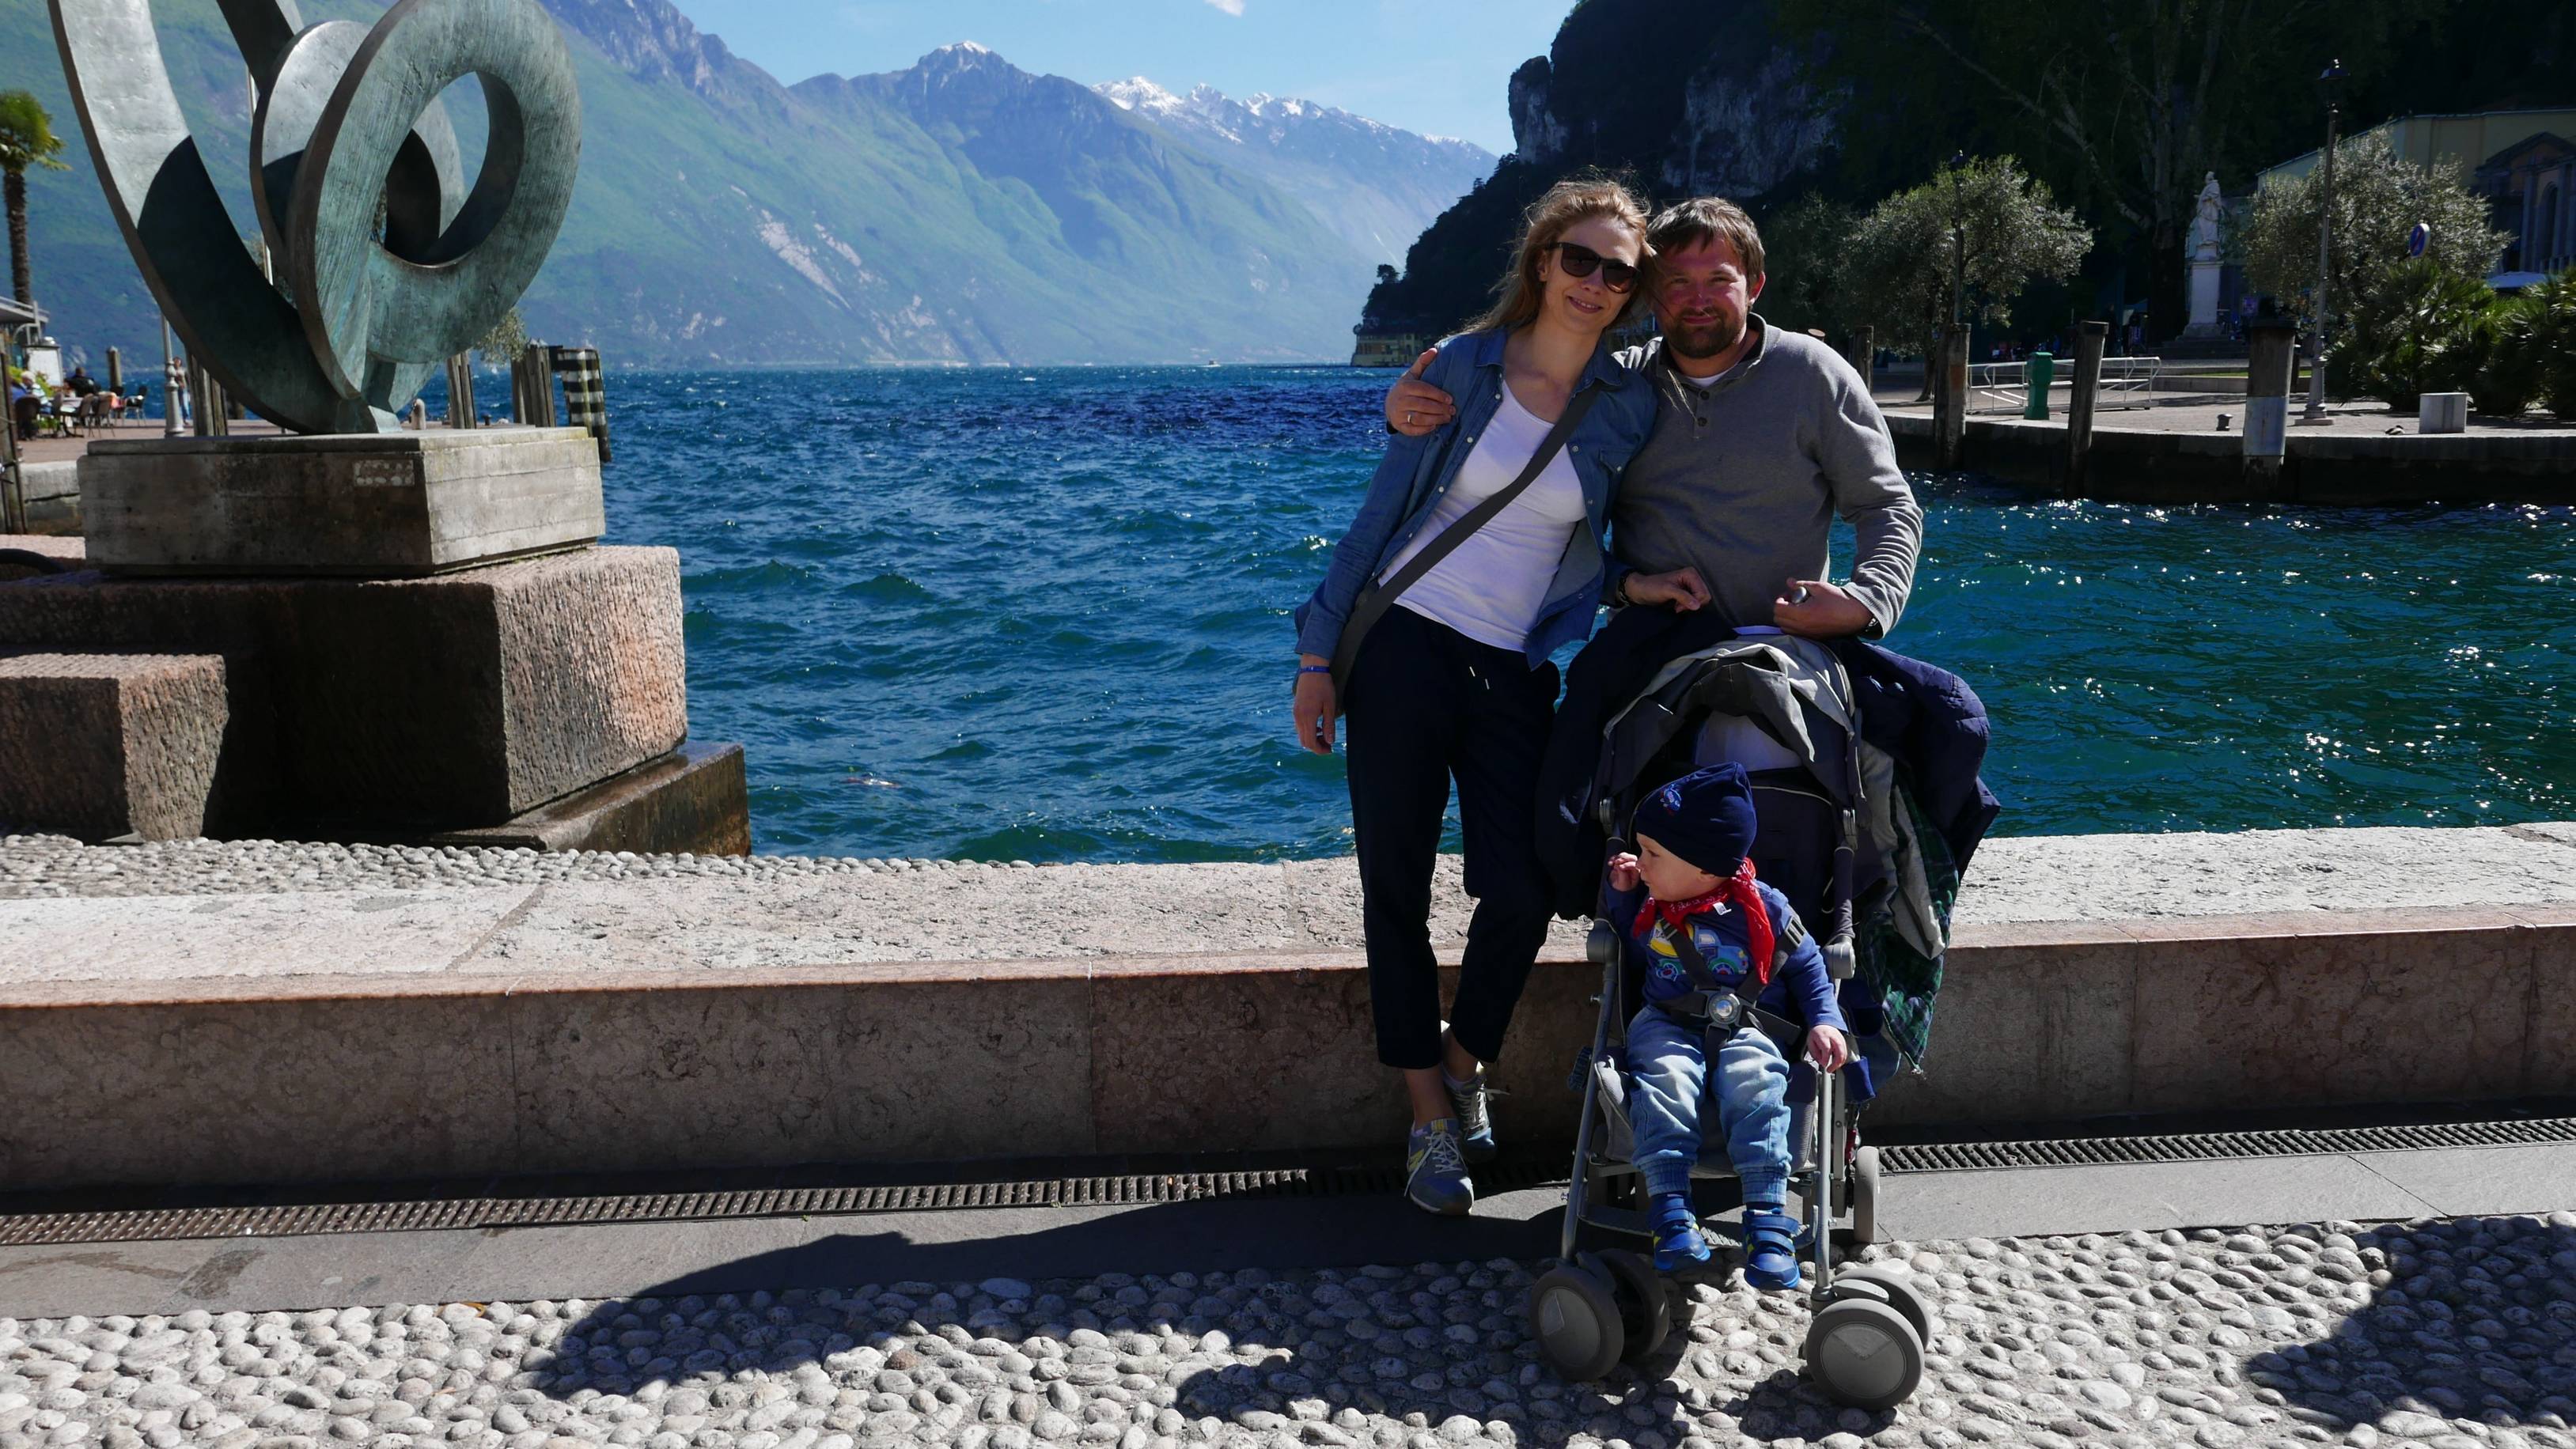 A family holiday in Riva del Garda – main image